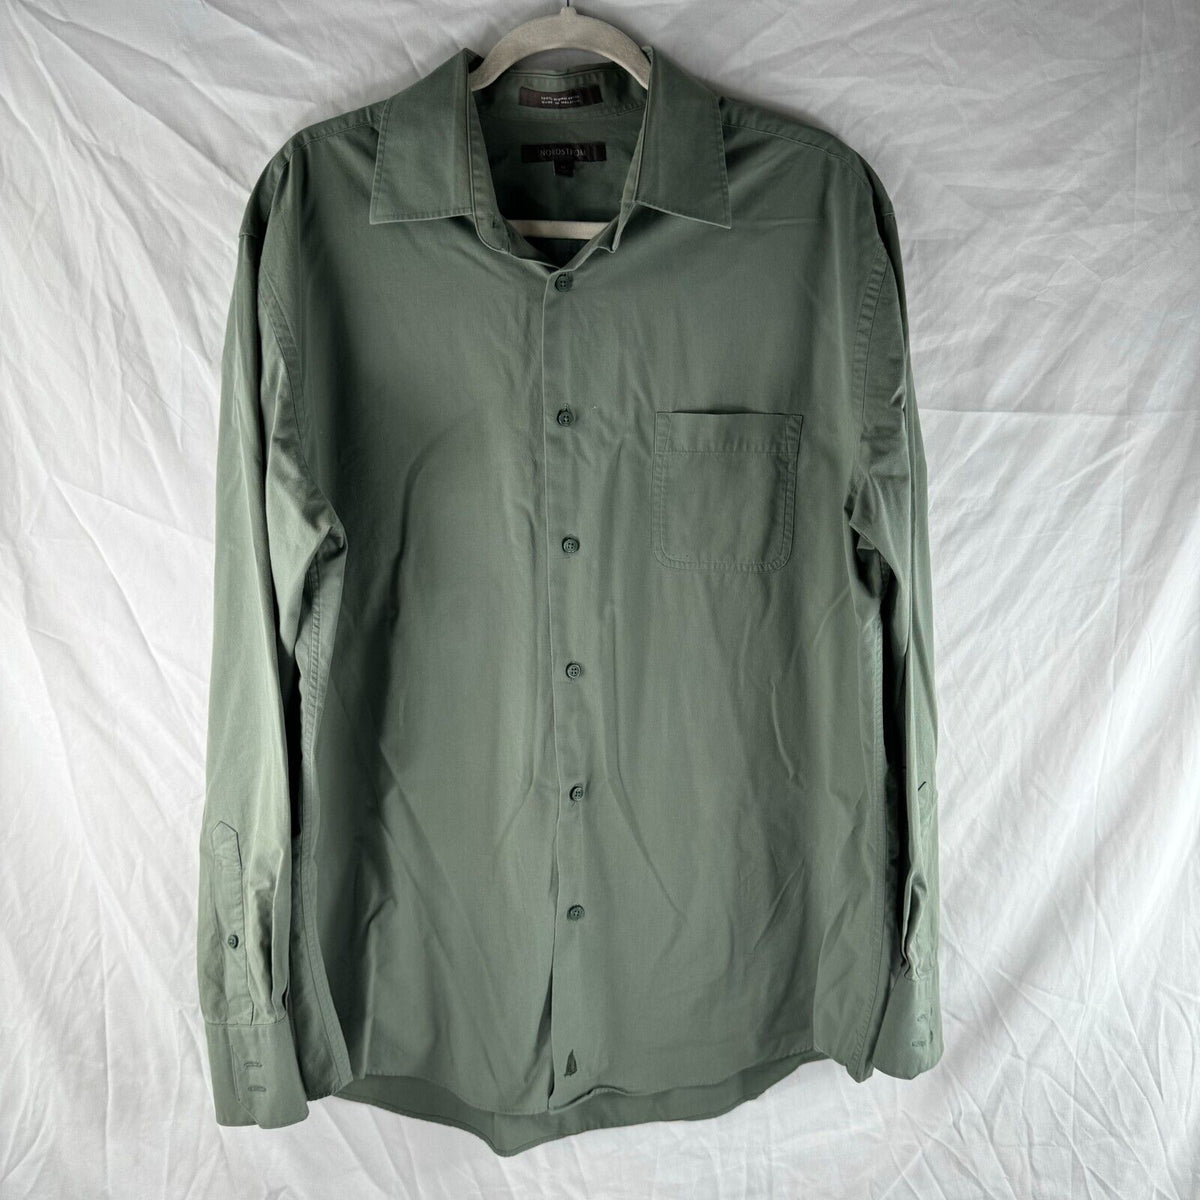 Nordstrom Tailor Fit Long Sleeve Button Up Green Shirt Mens XL